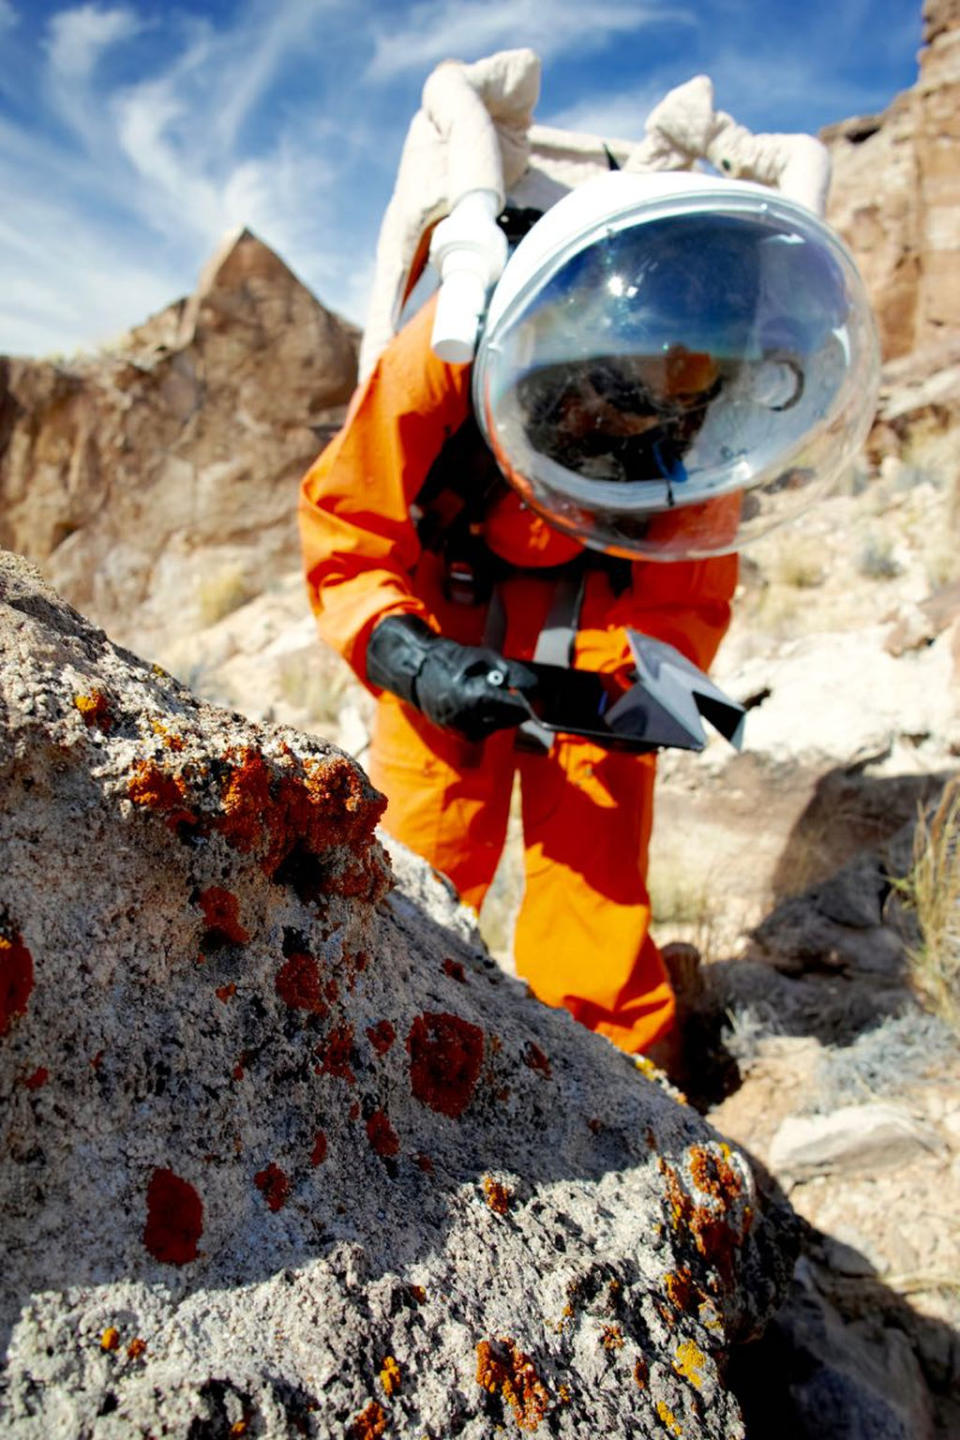 Anu sampling lichens. <cite>The Mars Society</cite>